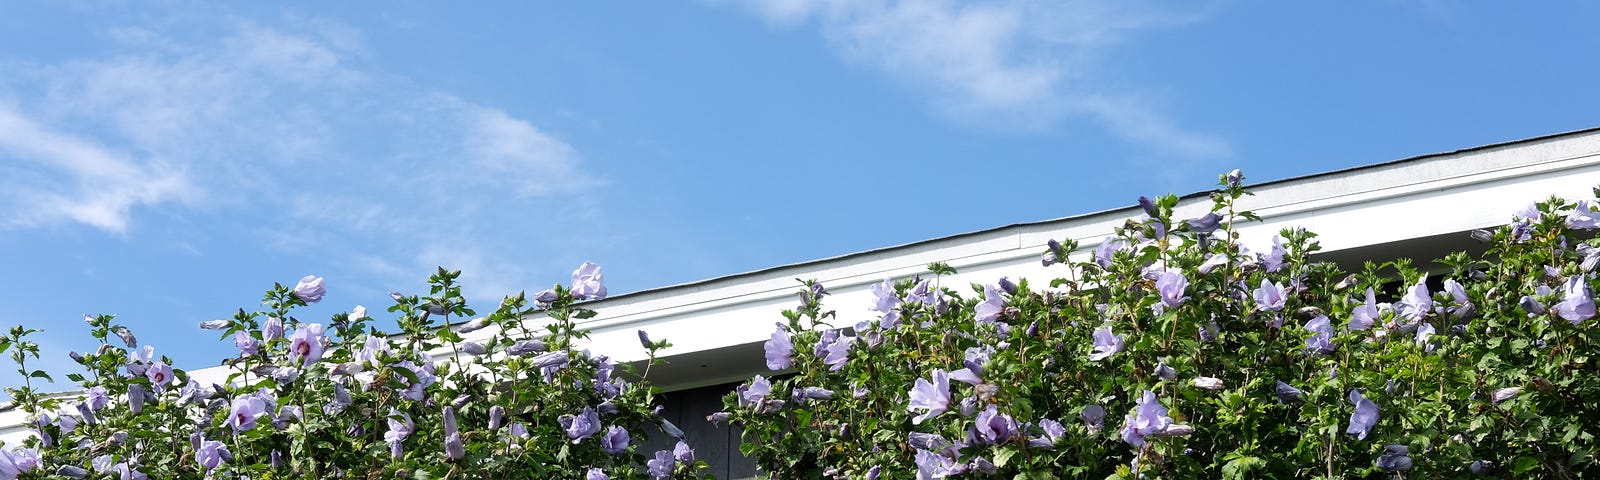 Purple flowers against a clear blue sky